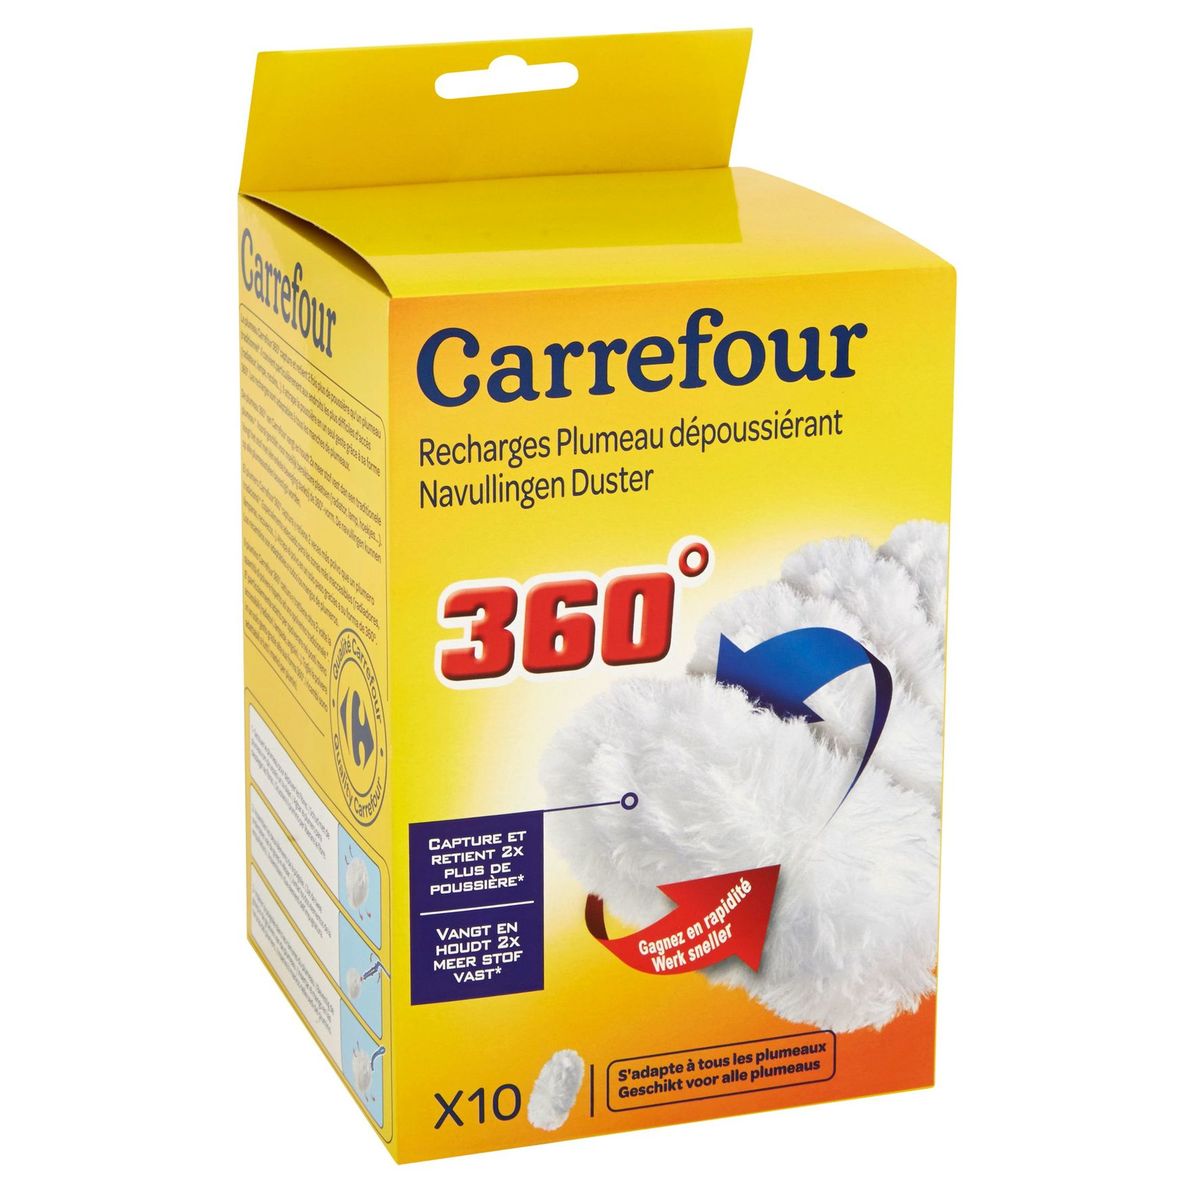 Carrefour Navullingen Duster 360° x 10